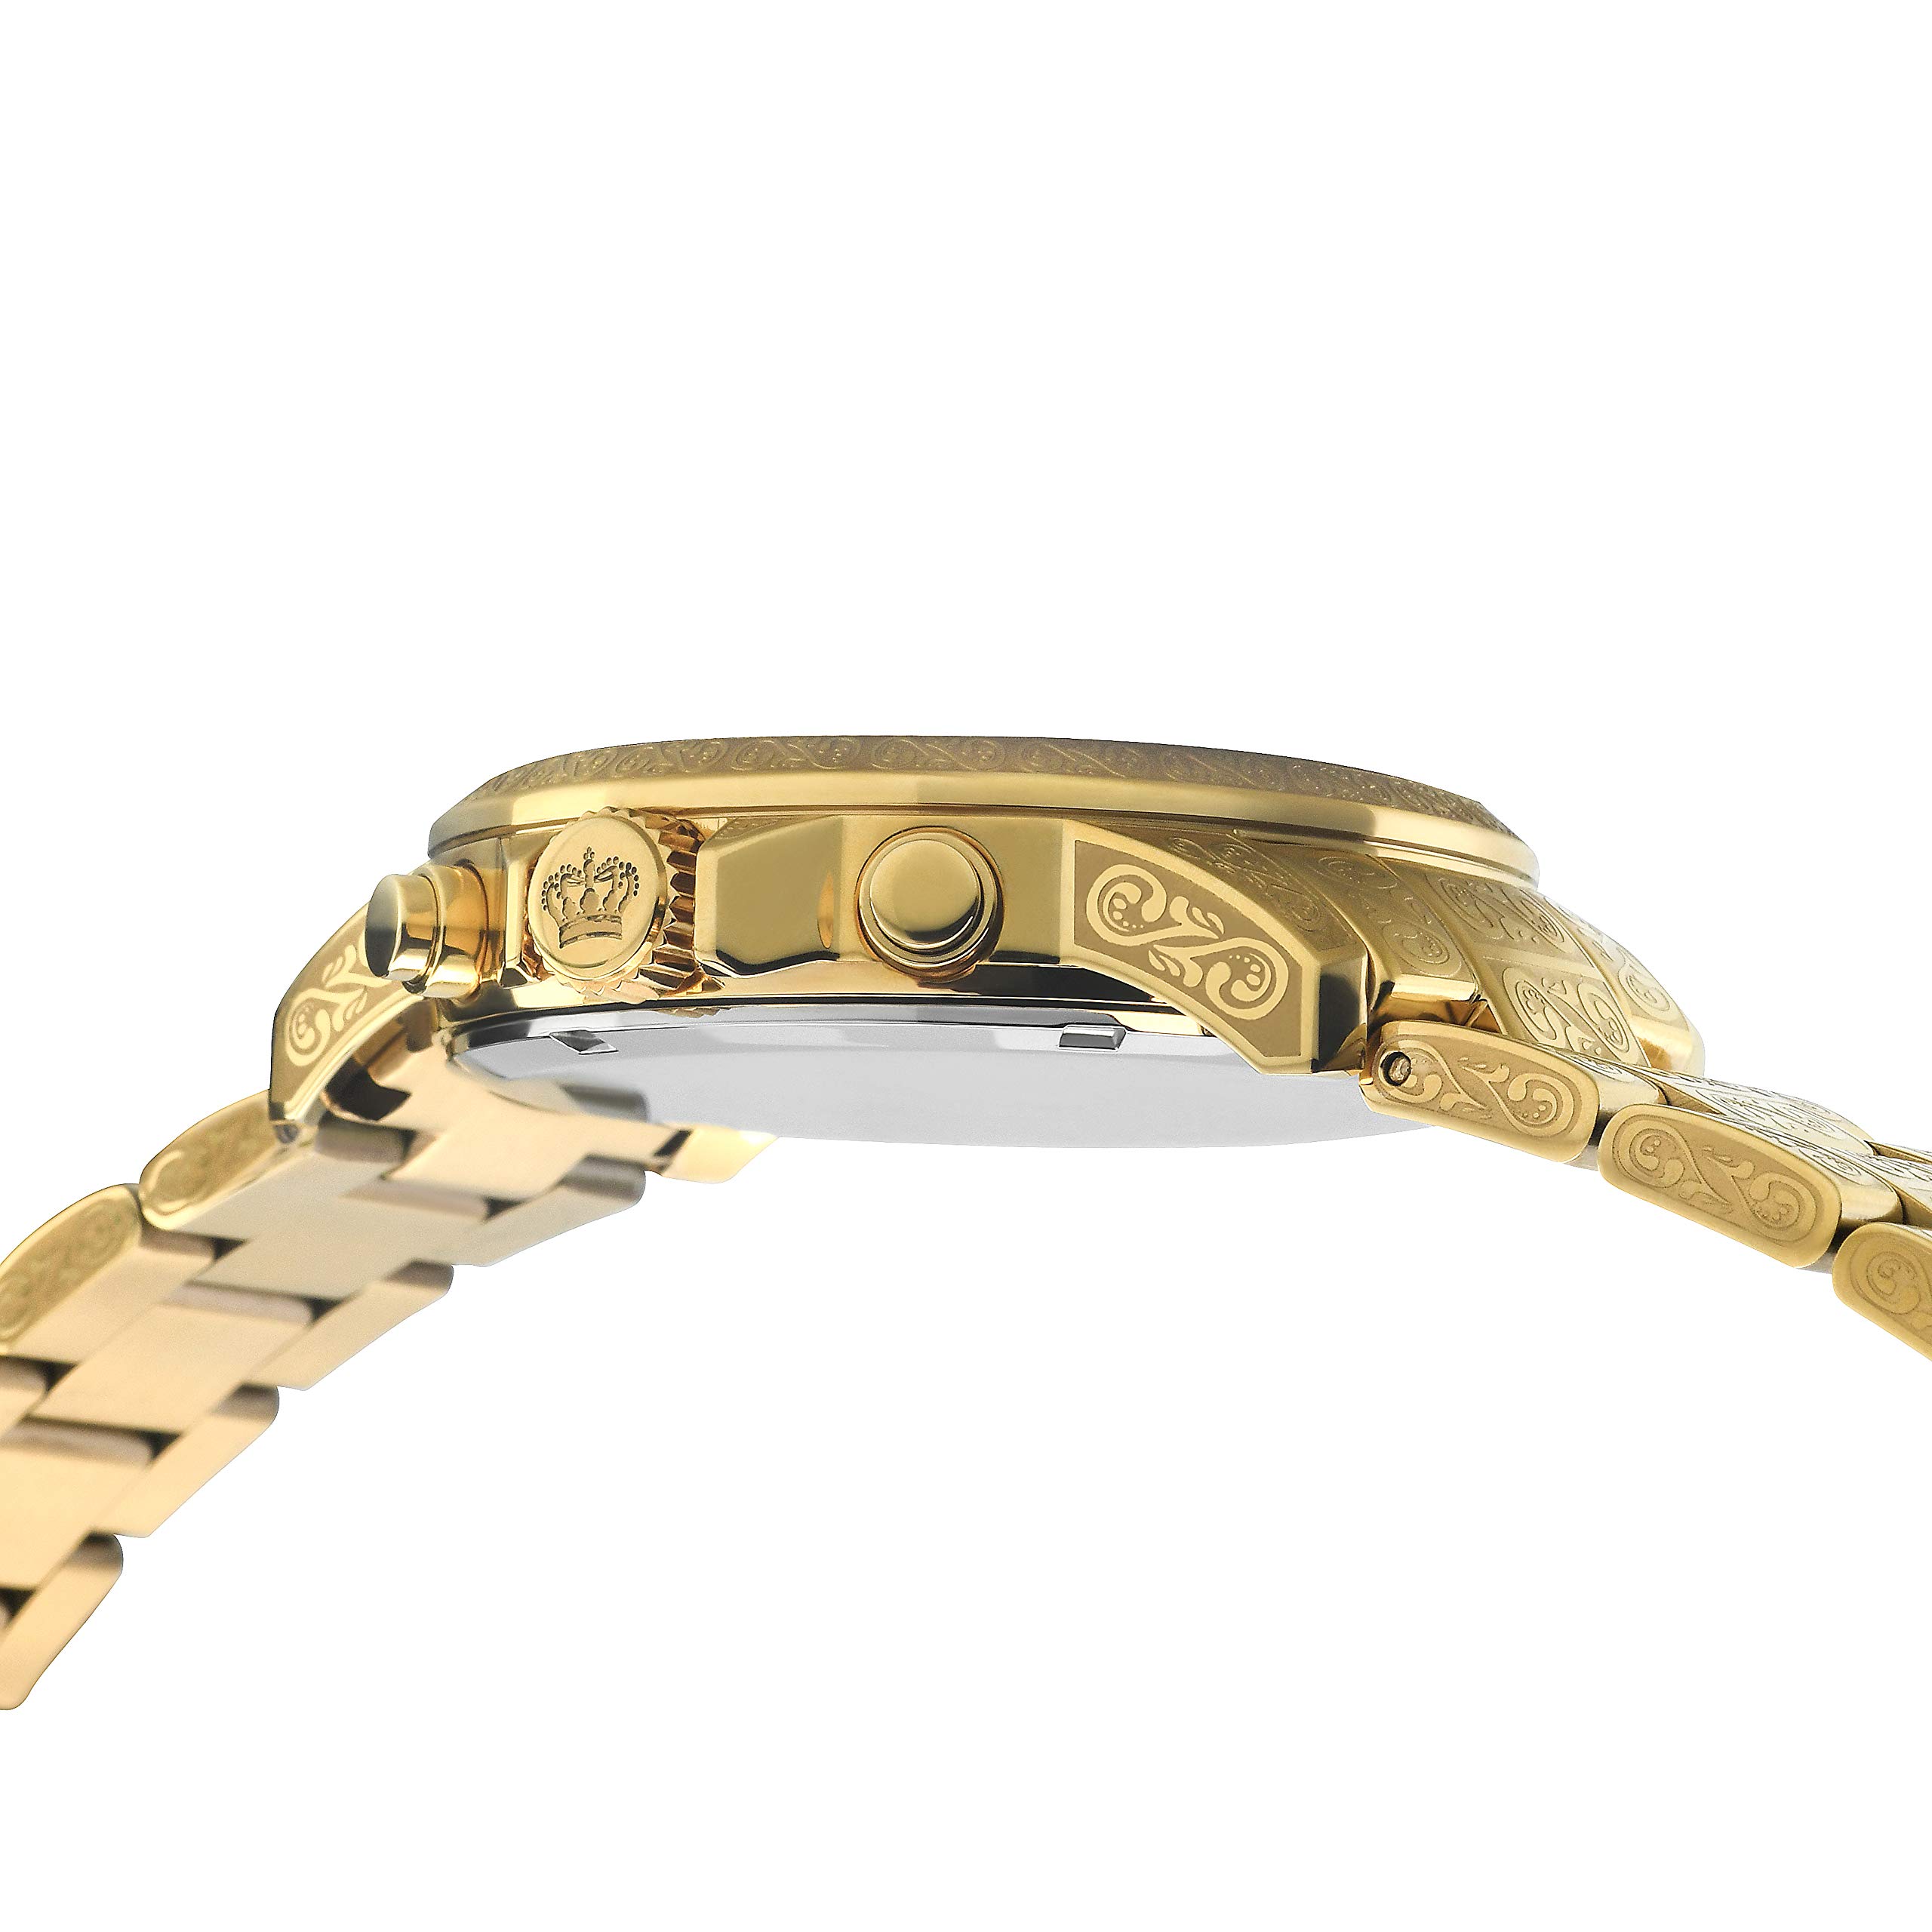 LOUIS XVI Herren-Armbanduhr Palais Royale Stahlband Gold Schwarz Karbon echte Diamanten Römische Zahlen Chronograph Analog Quarz Edelstahl 1018